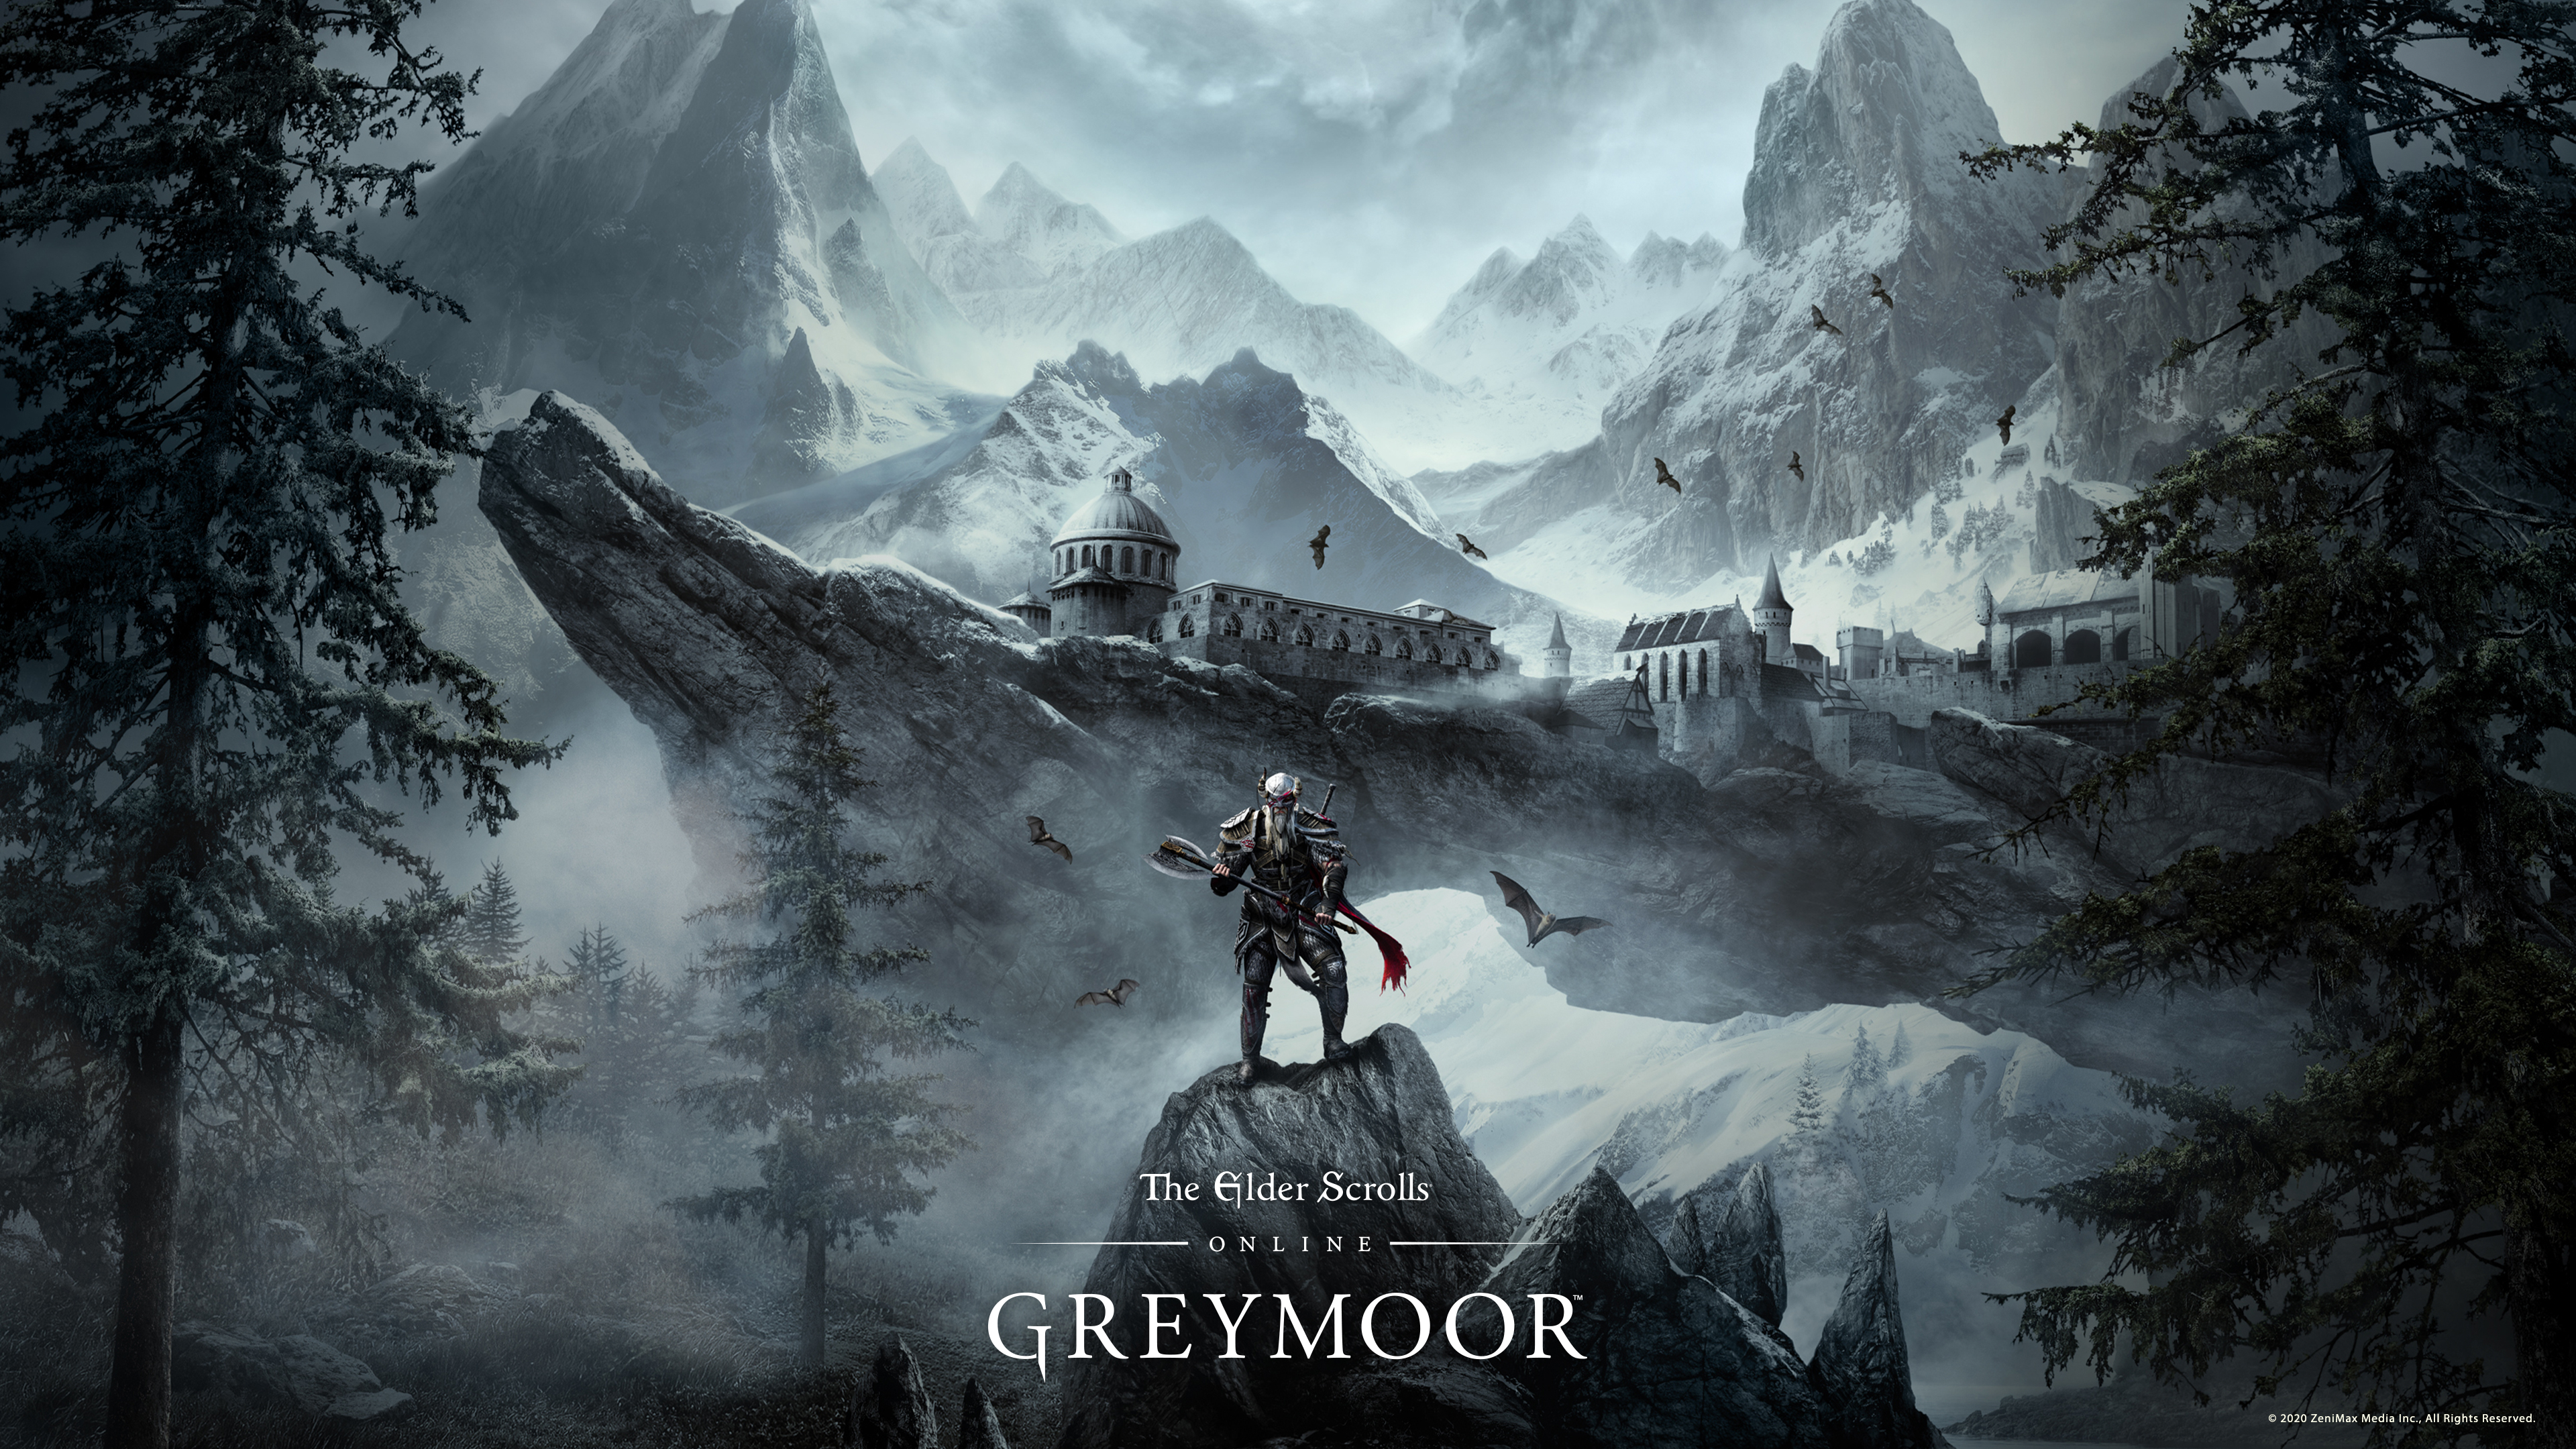 The Elder Scrolls Online The Elder Scrolls Online Greymoor RPG Video Games PC Gaming 2020 Year 3840x2160